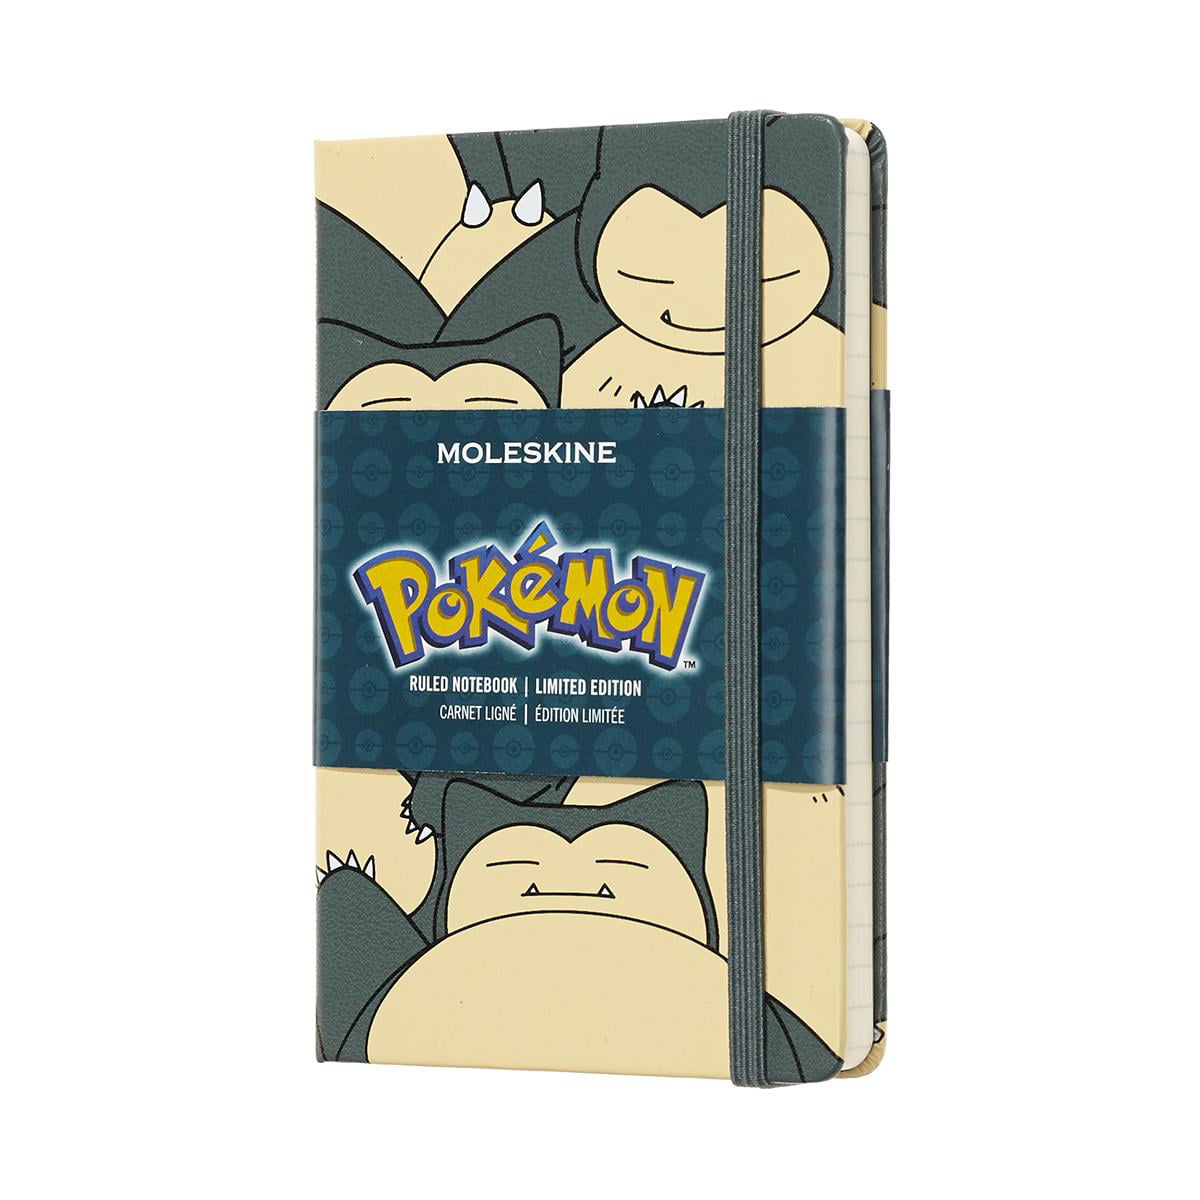 Pokemon Hard Cover Ruled Notebook 